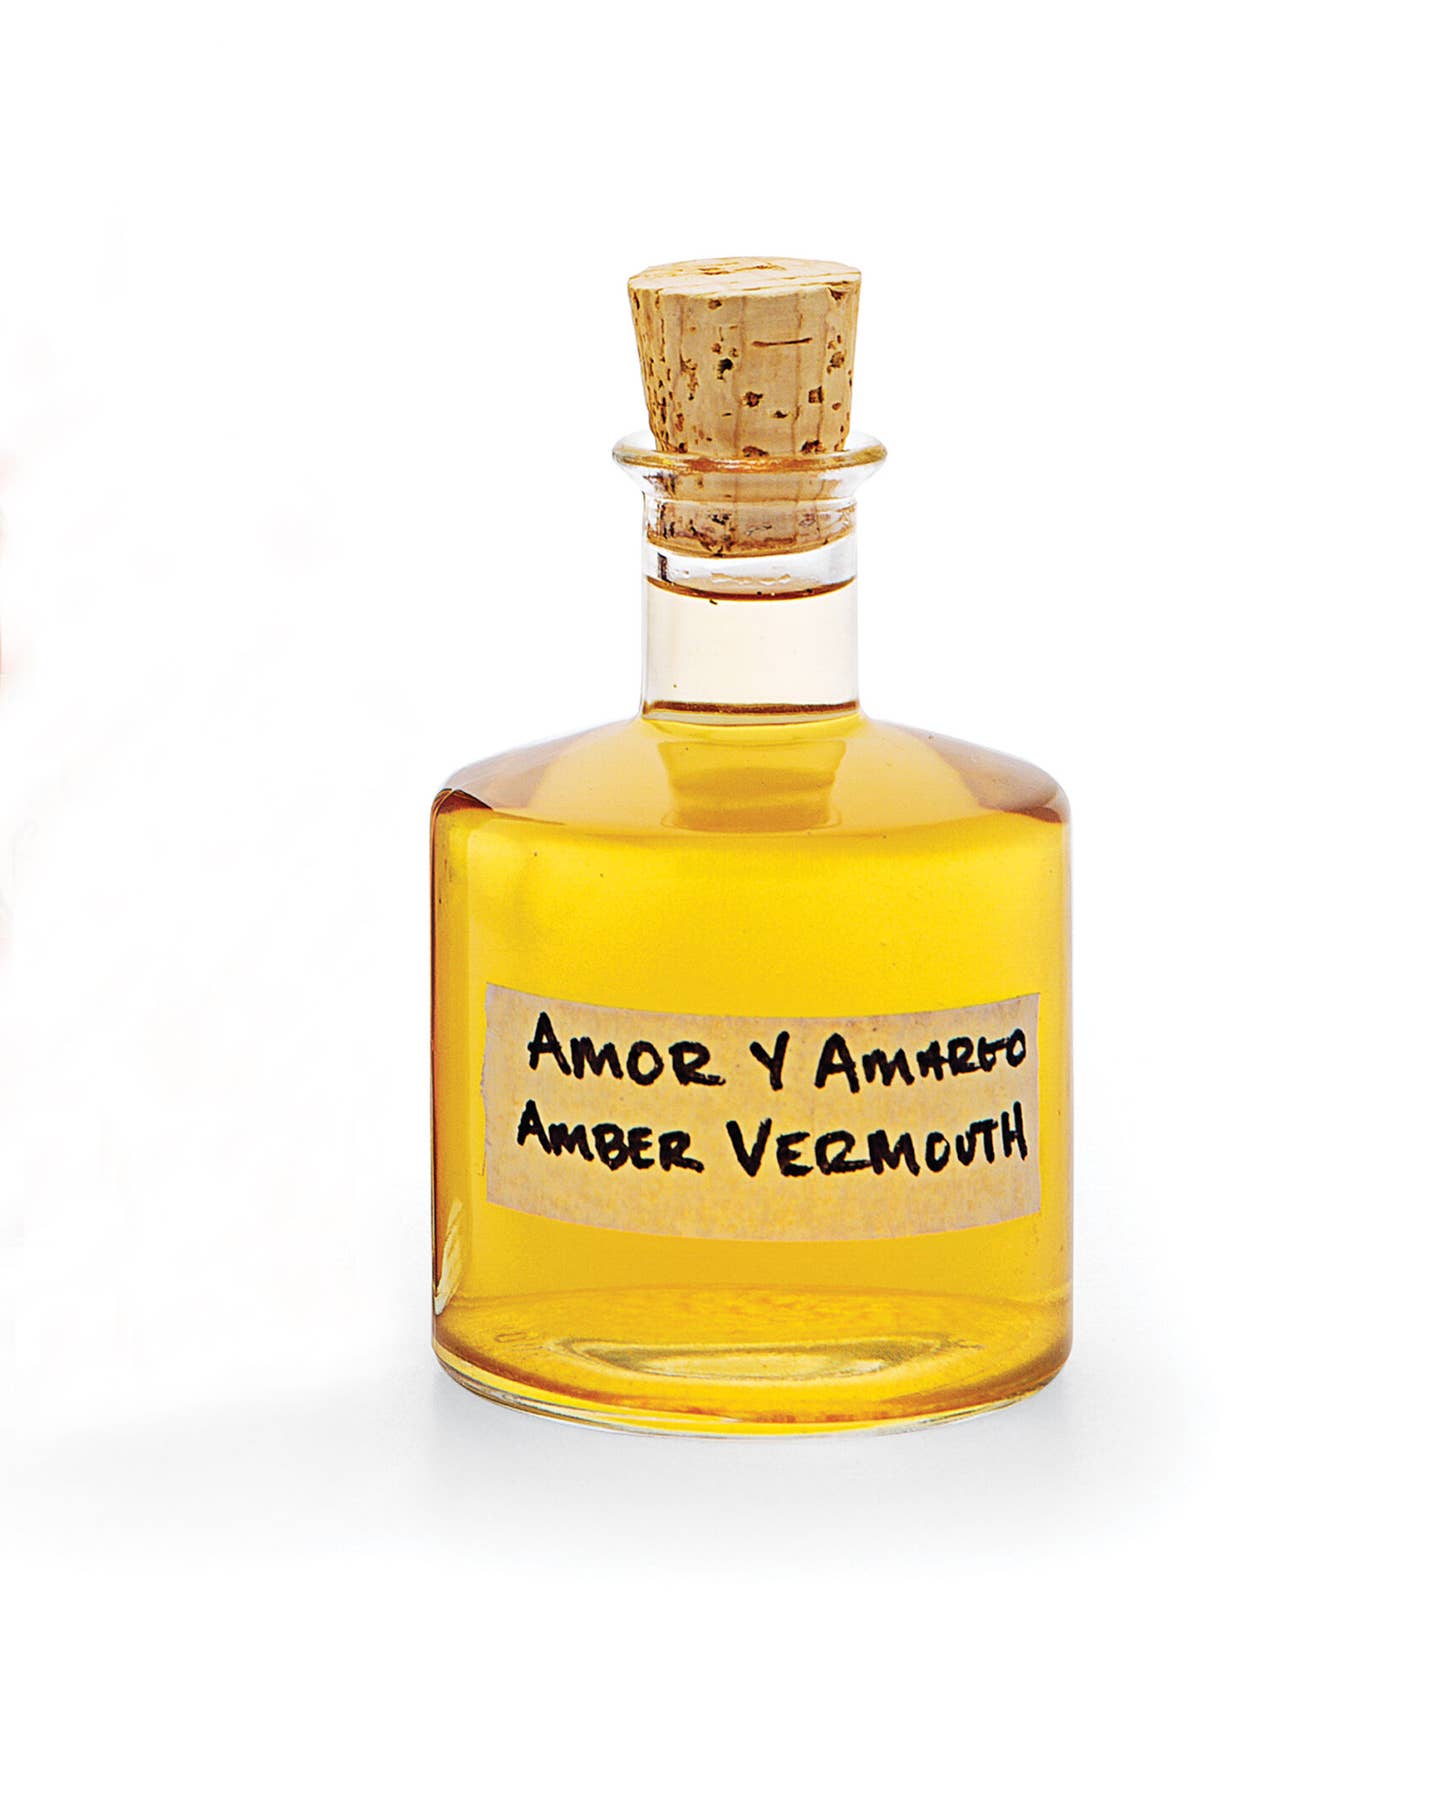 Amor y Amargo’s Amber Vermouth